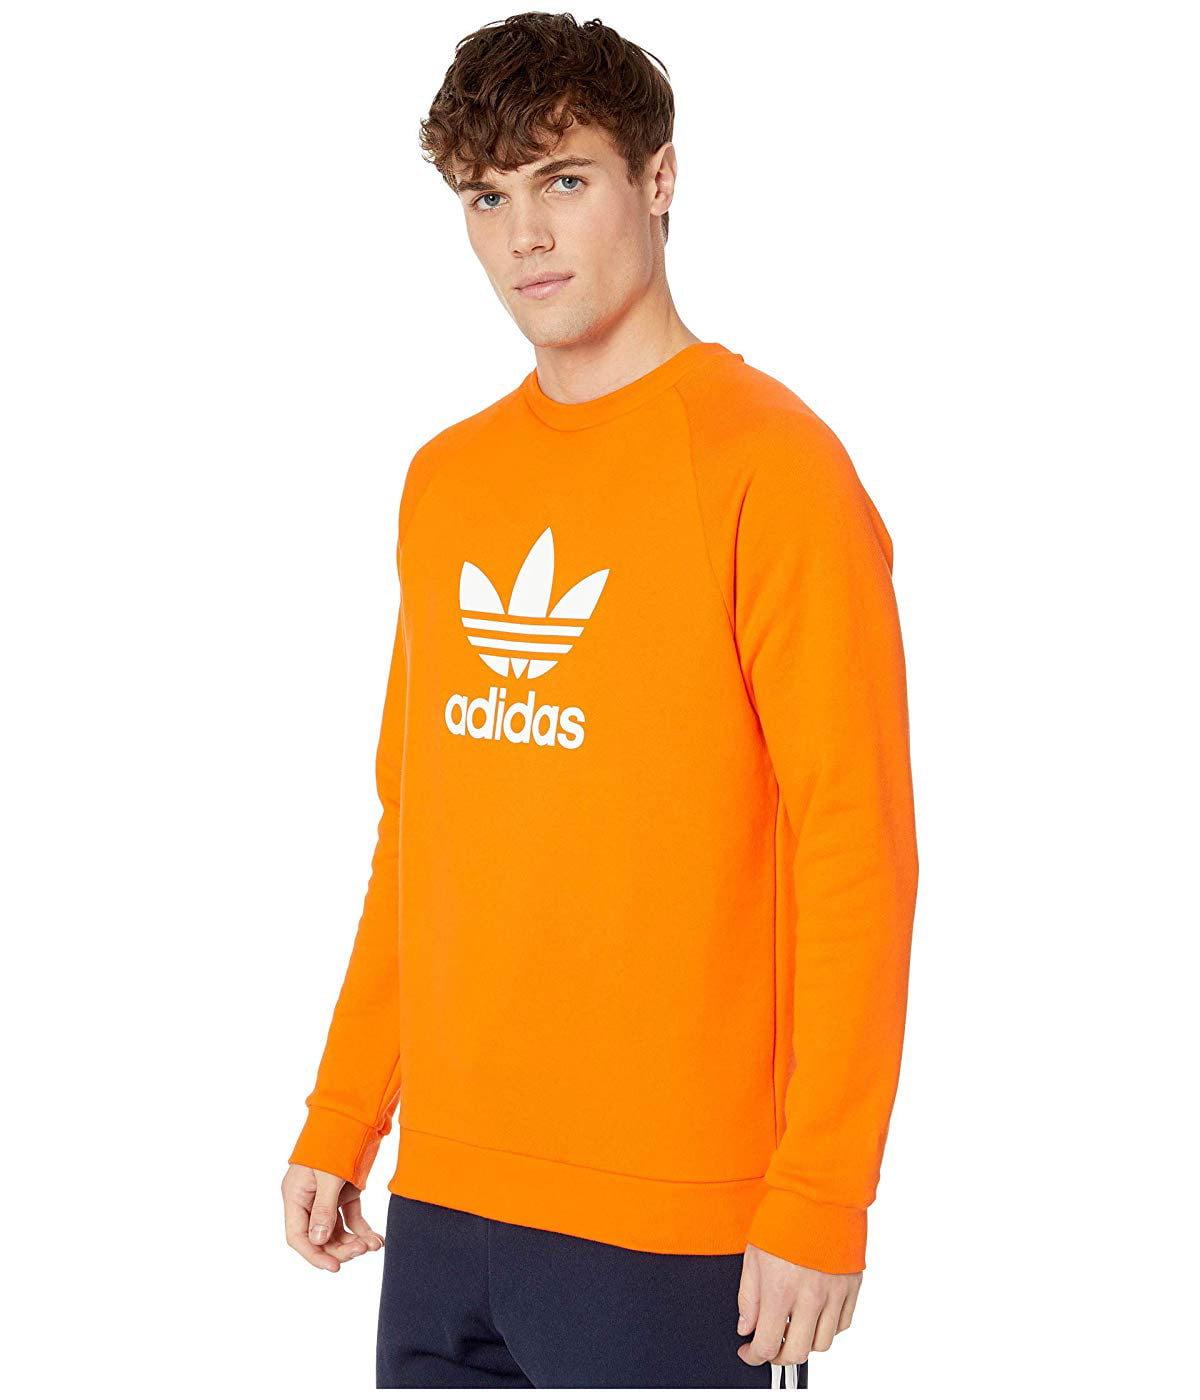 adidas orange sweater